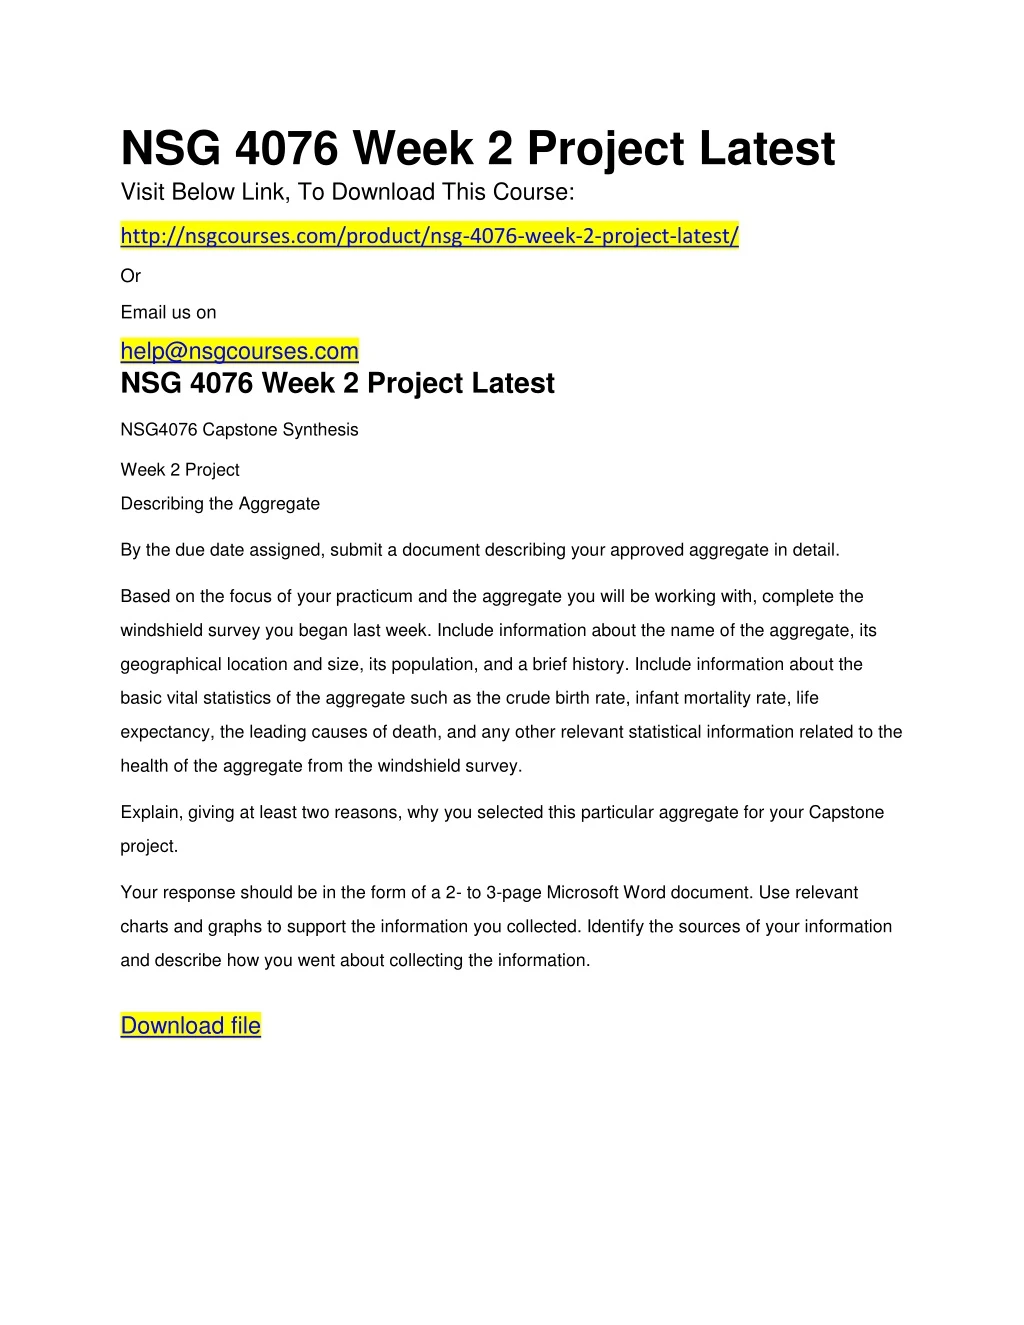 nsg 4076 week 2 project latest visit below link